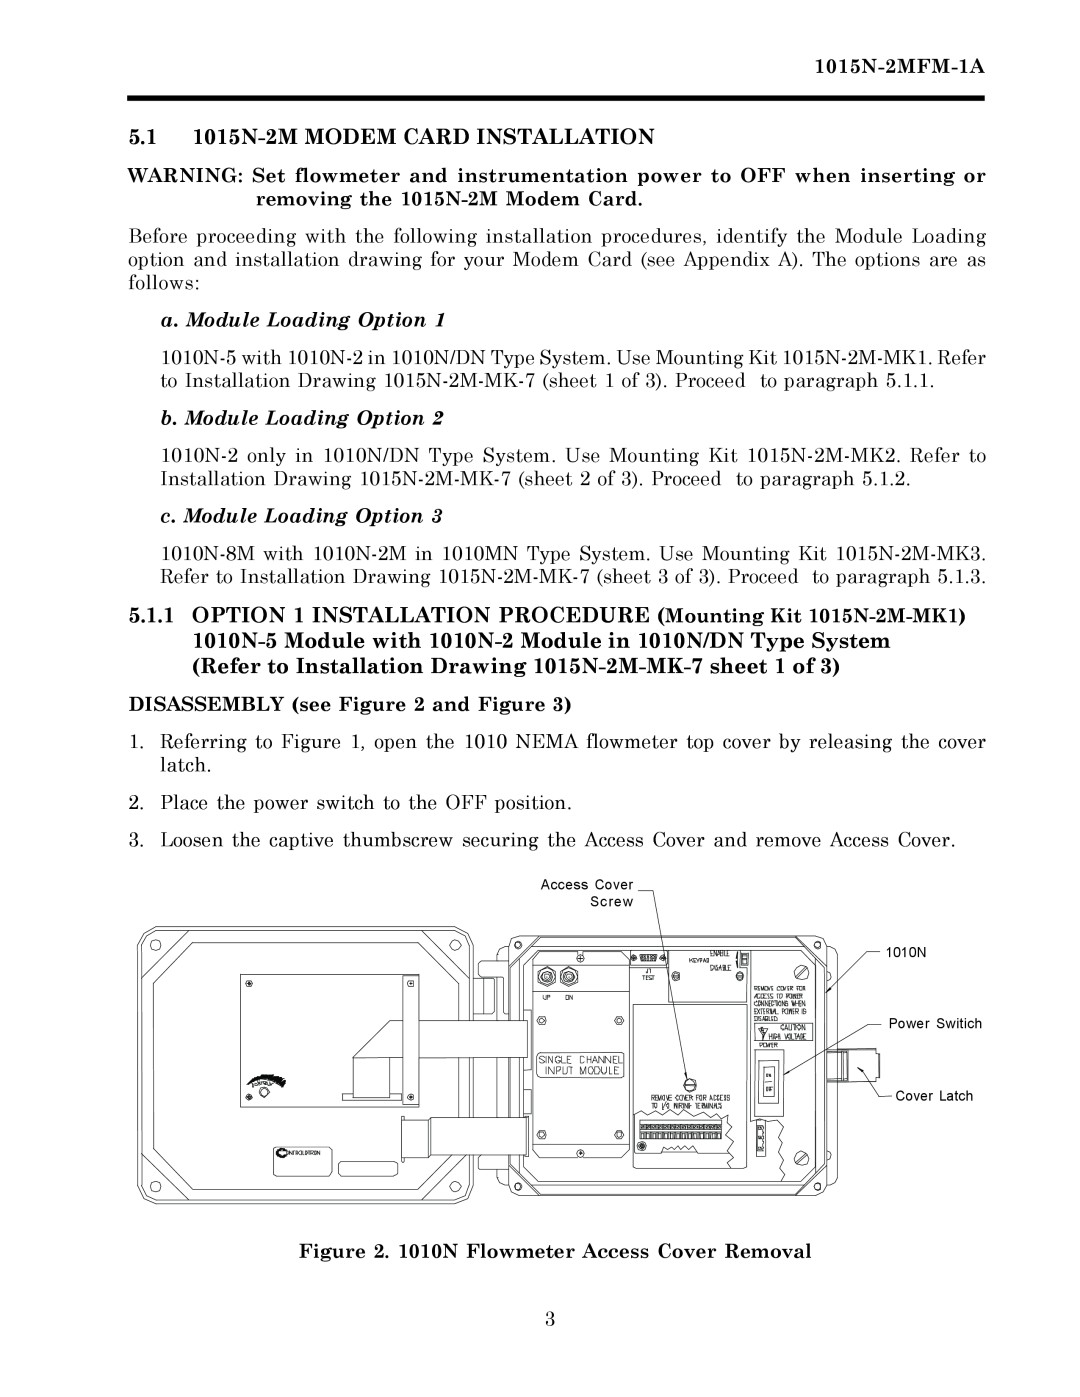 Siemens 1015N-2MFM-1A manual 5.1 1015N-2M MODEM CARD INSTALLATION, Access Cover, Screw, 1010N, Power Switich, Cover Latch 